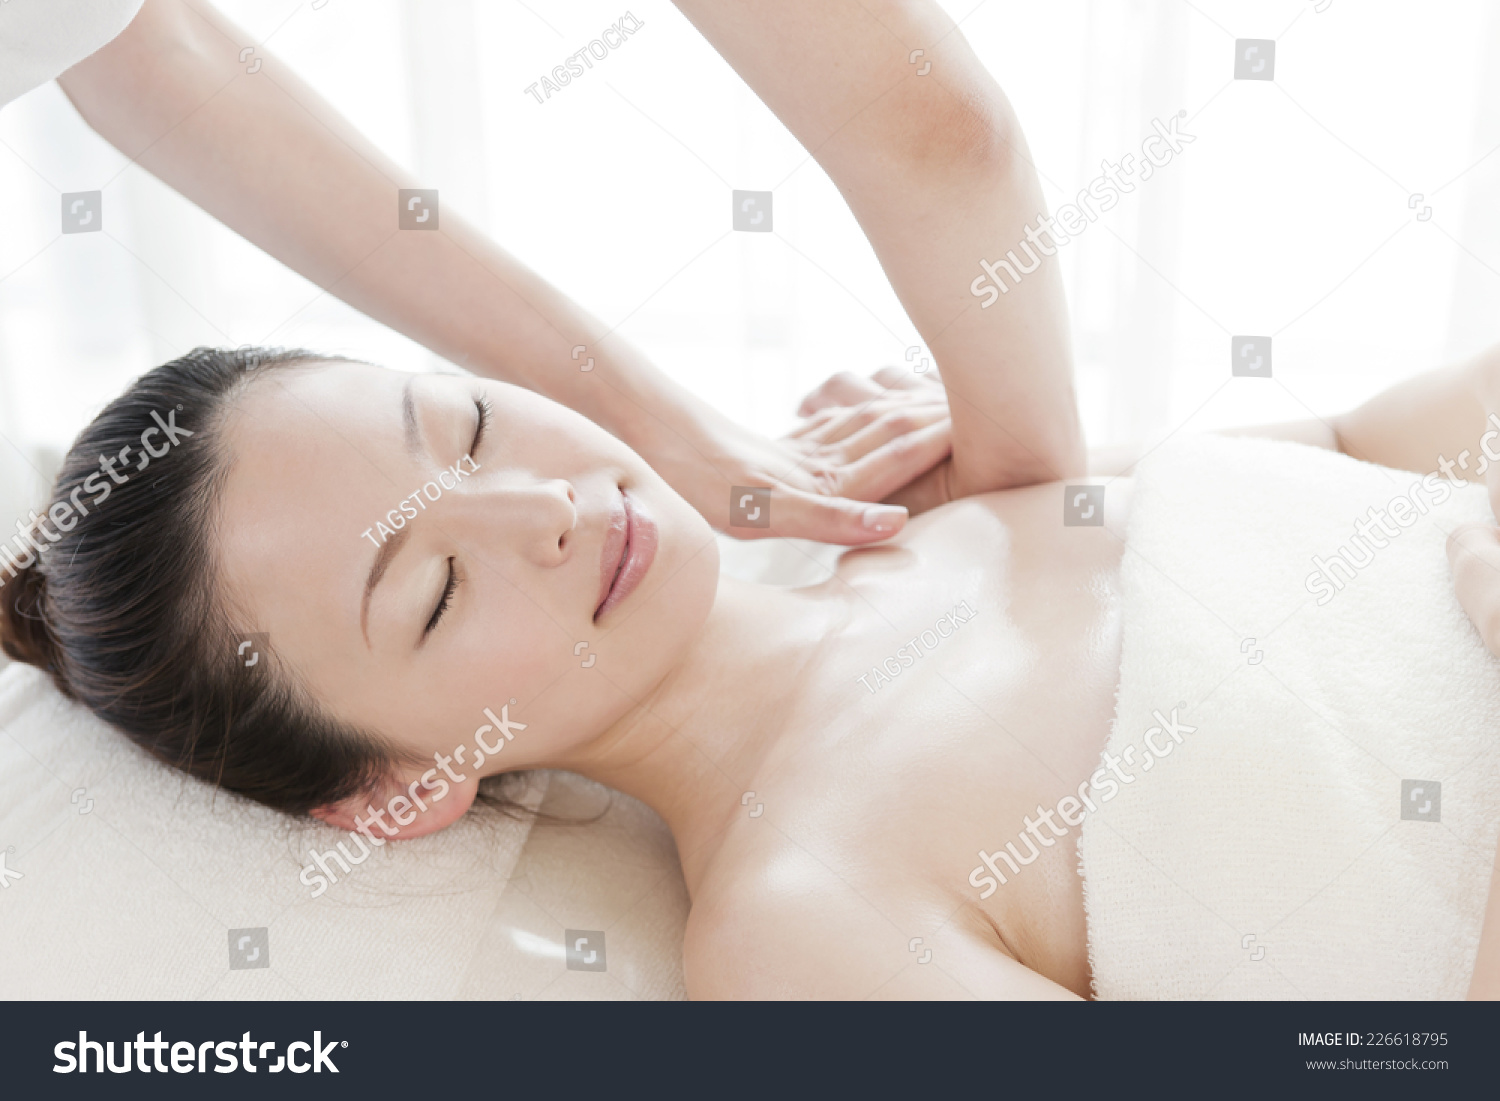 catherine finucane add japanese oil massage therapy photo